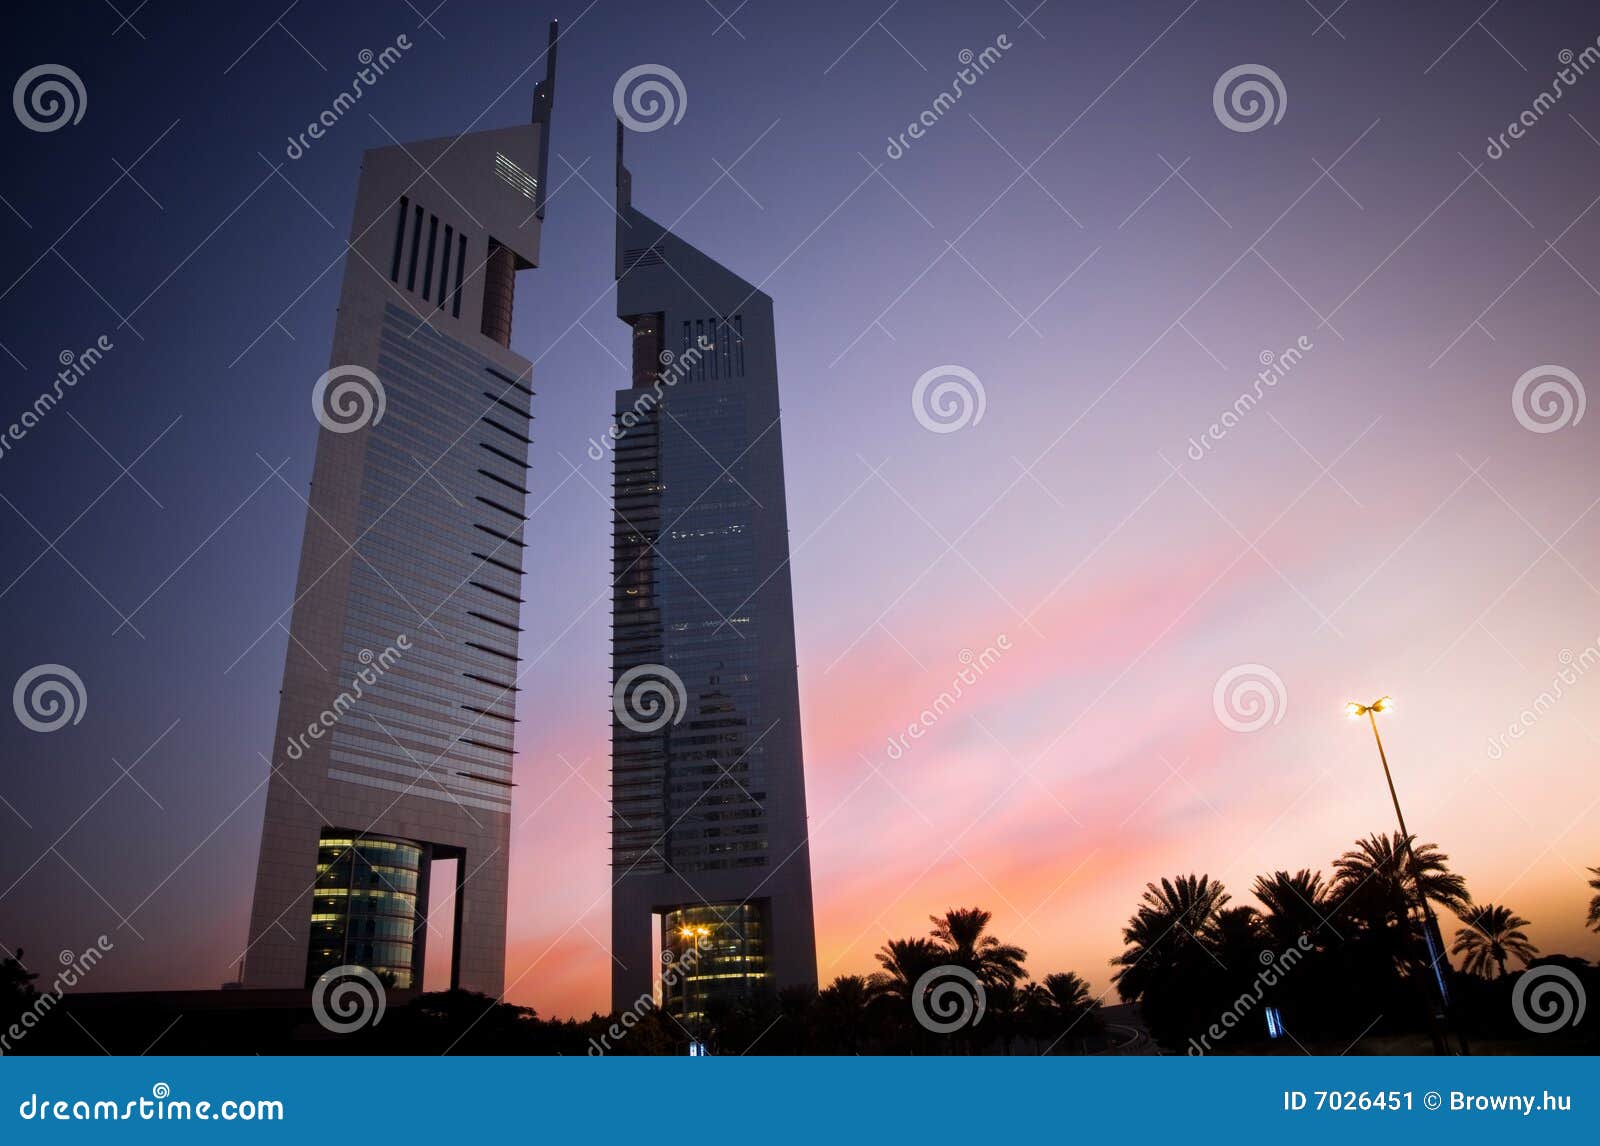 dubai emirates towers